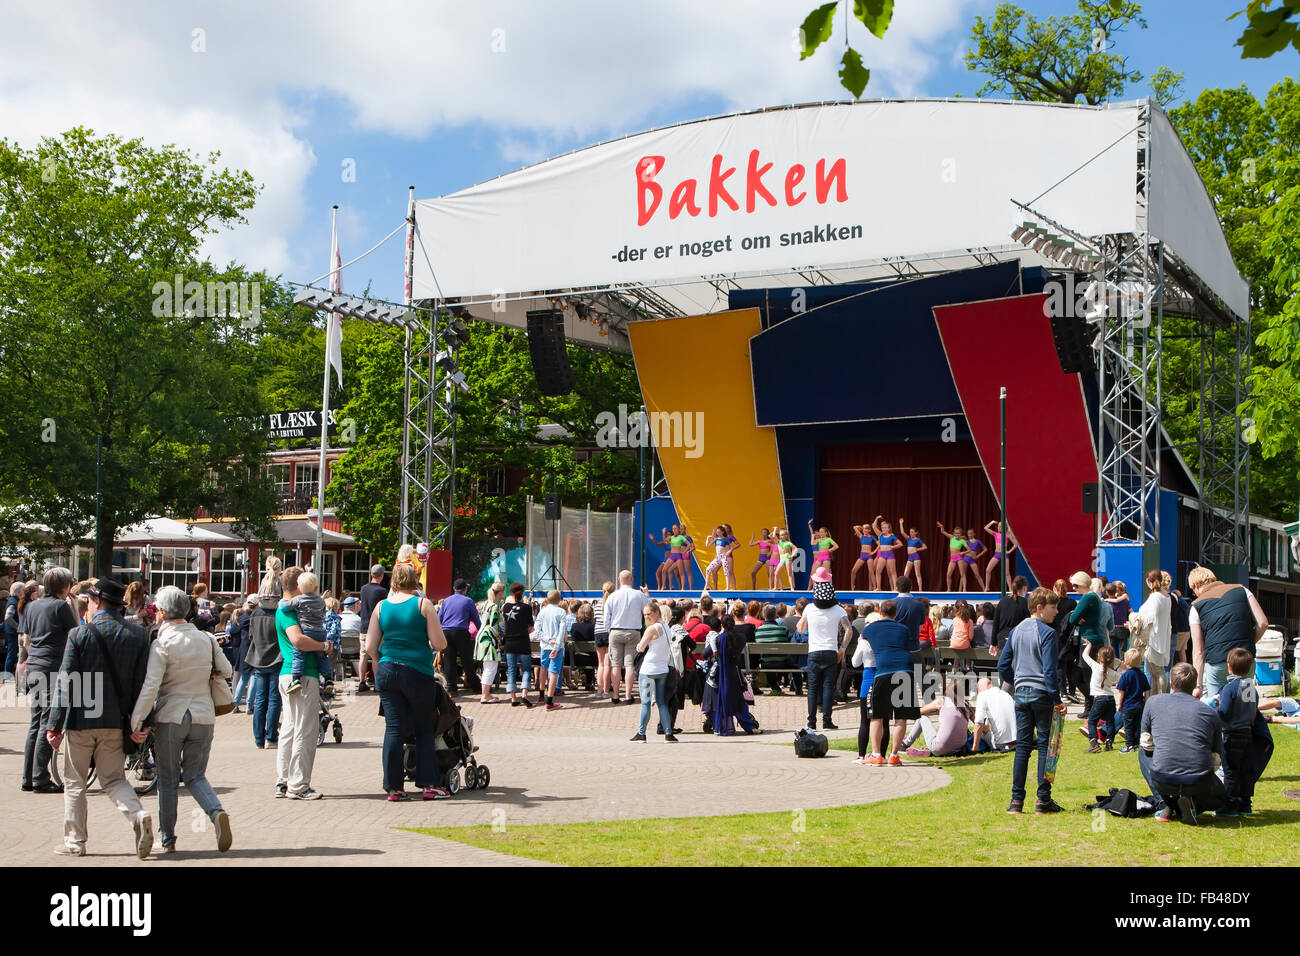 Entertainment on the platform at the amusement park Bakken, Klampenborg, Copenhagen, Denmark Stock Photo